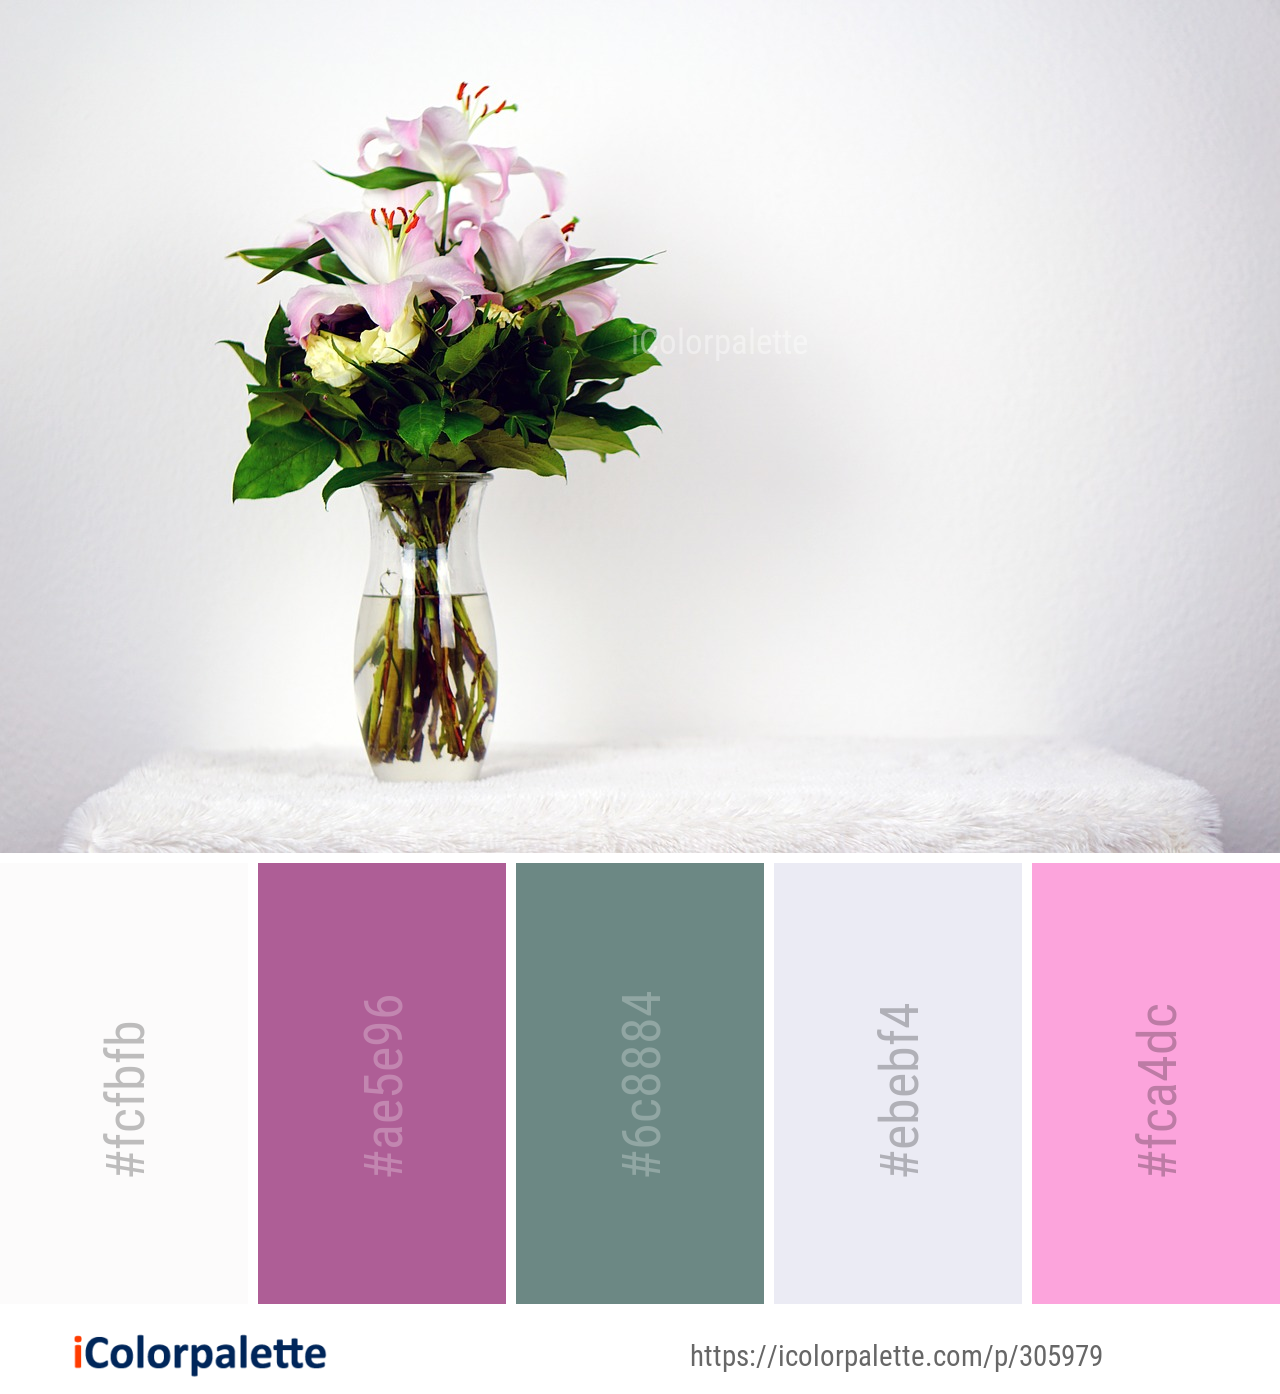 Color Palette Ideas from Flower Vase Plant Image | iColorpalette